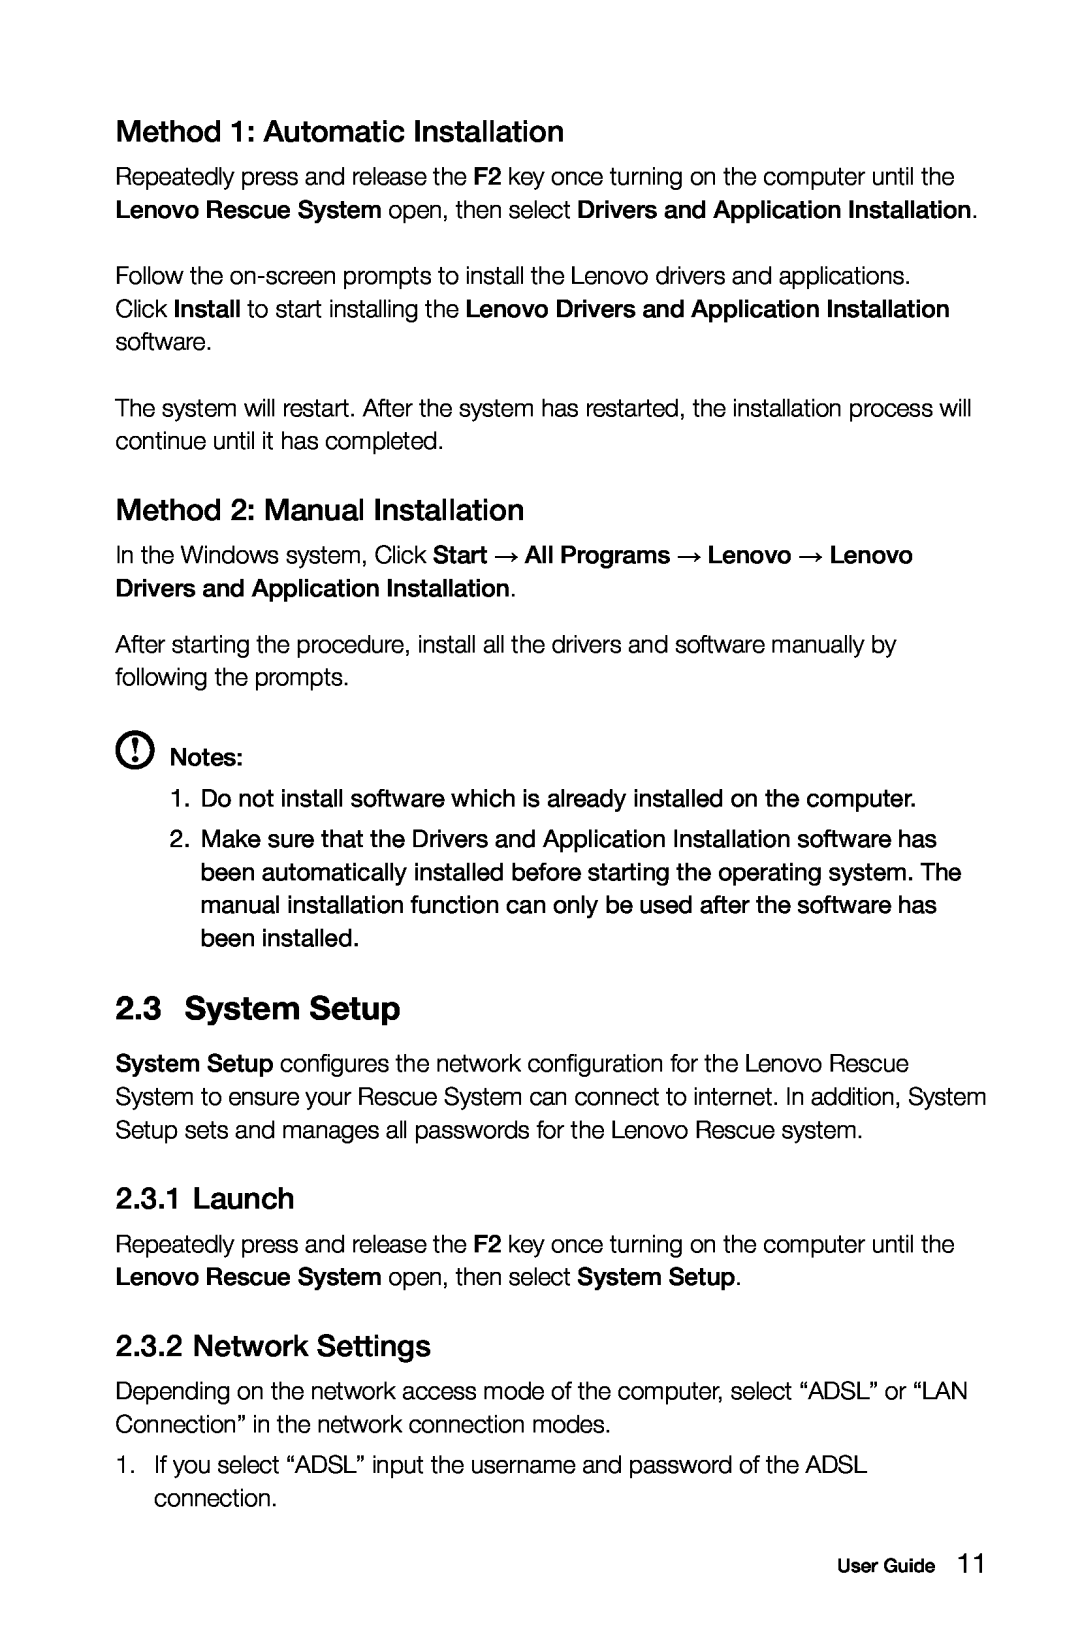 Lenovo H5S manual 2.3System Setup, Method 1 Automatic Installation, Method 2 Manual Installation, Launch, Network Settings 